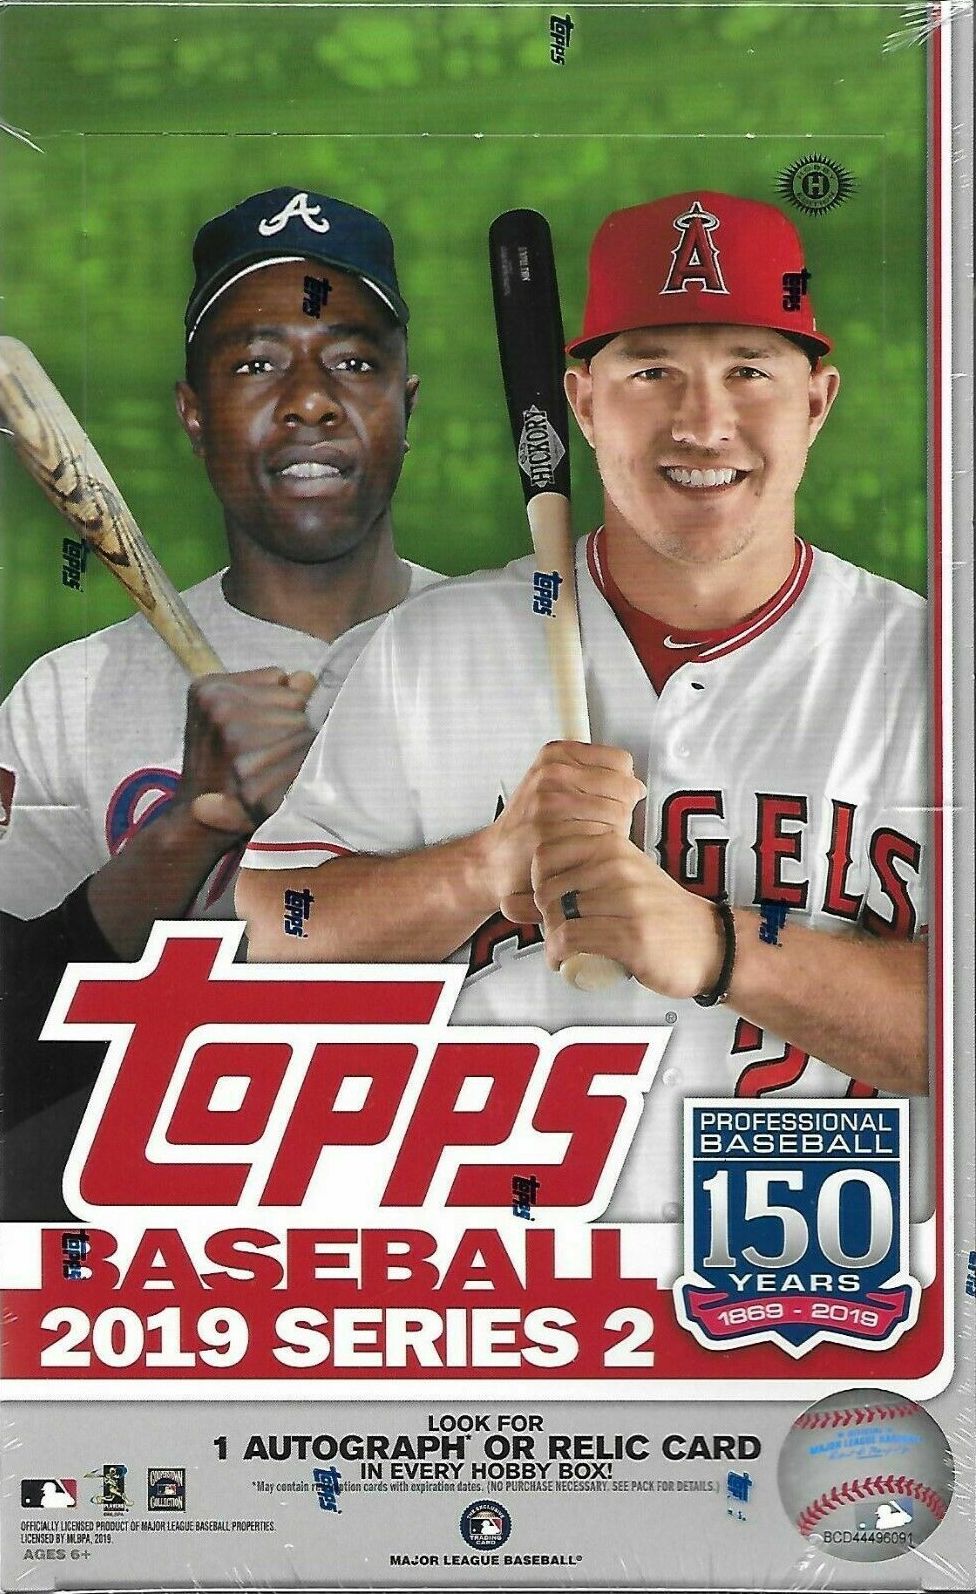 Image of Topps Baseball 2019 Series 2 sports trading card memorabilia